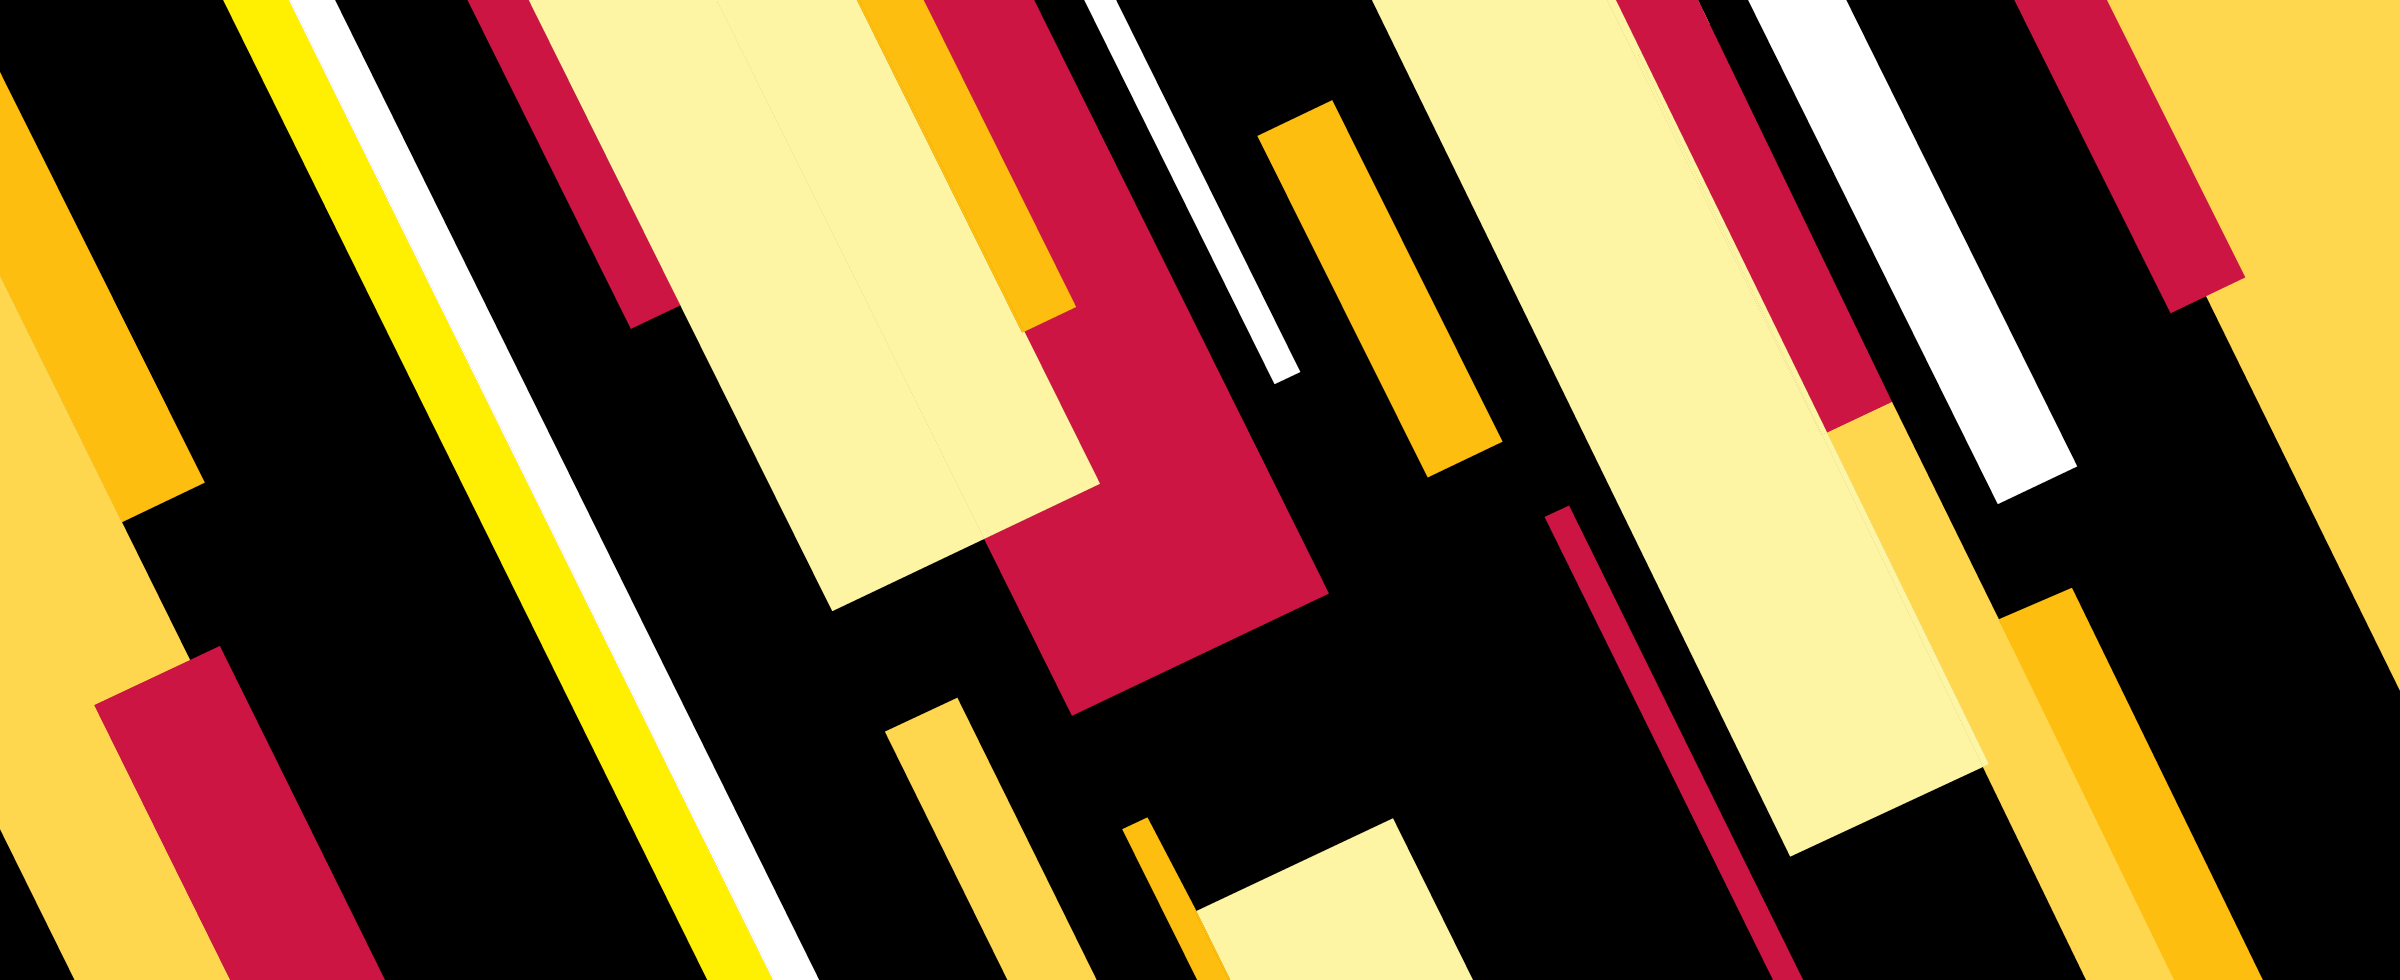 Red and yellow and black rectangular bars on an angle